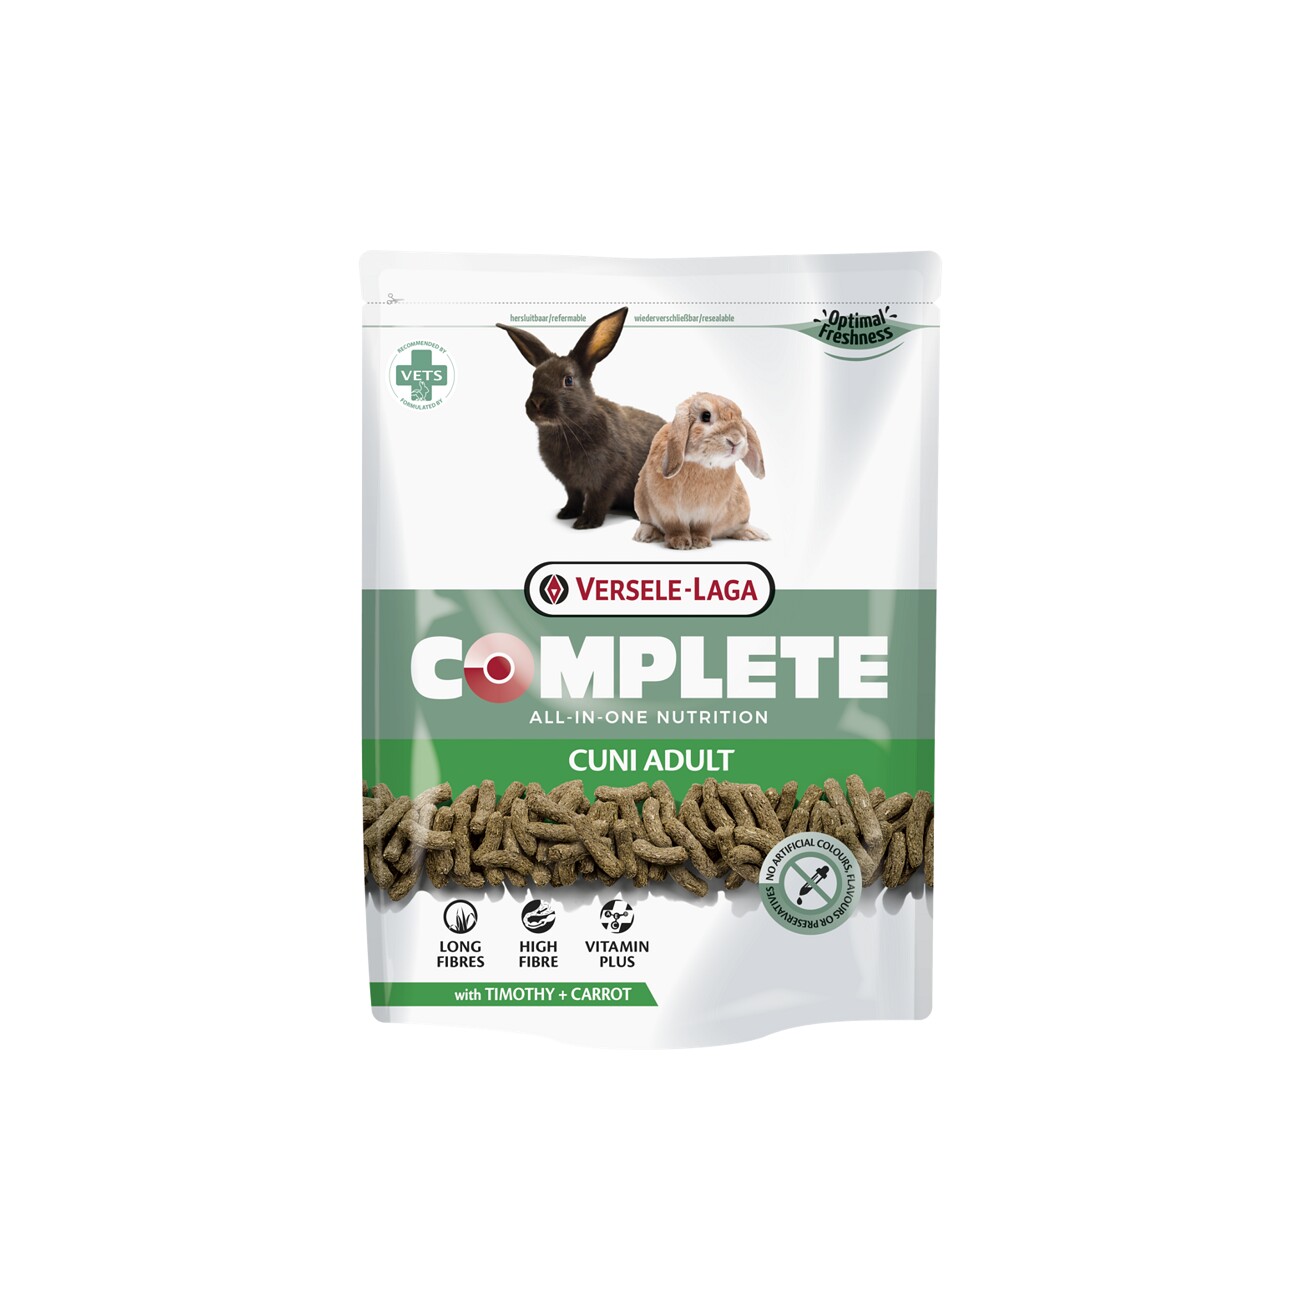 Versele-laga Complete Cuni Adult 8kg Rabbit Food Multicolor